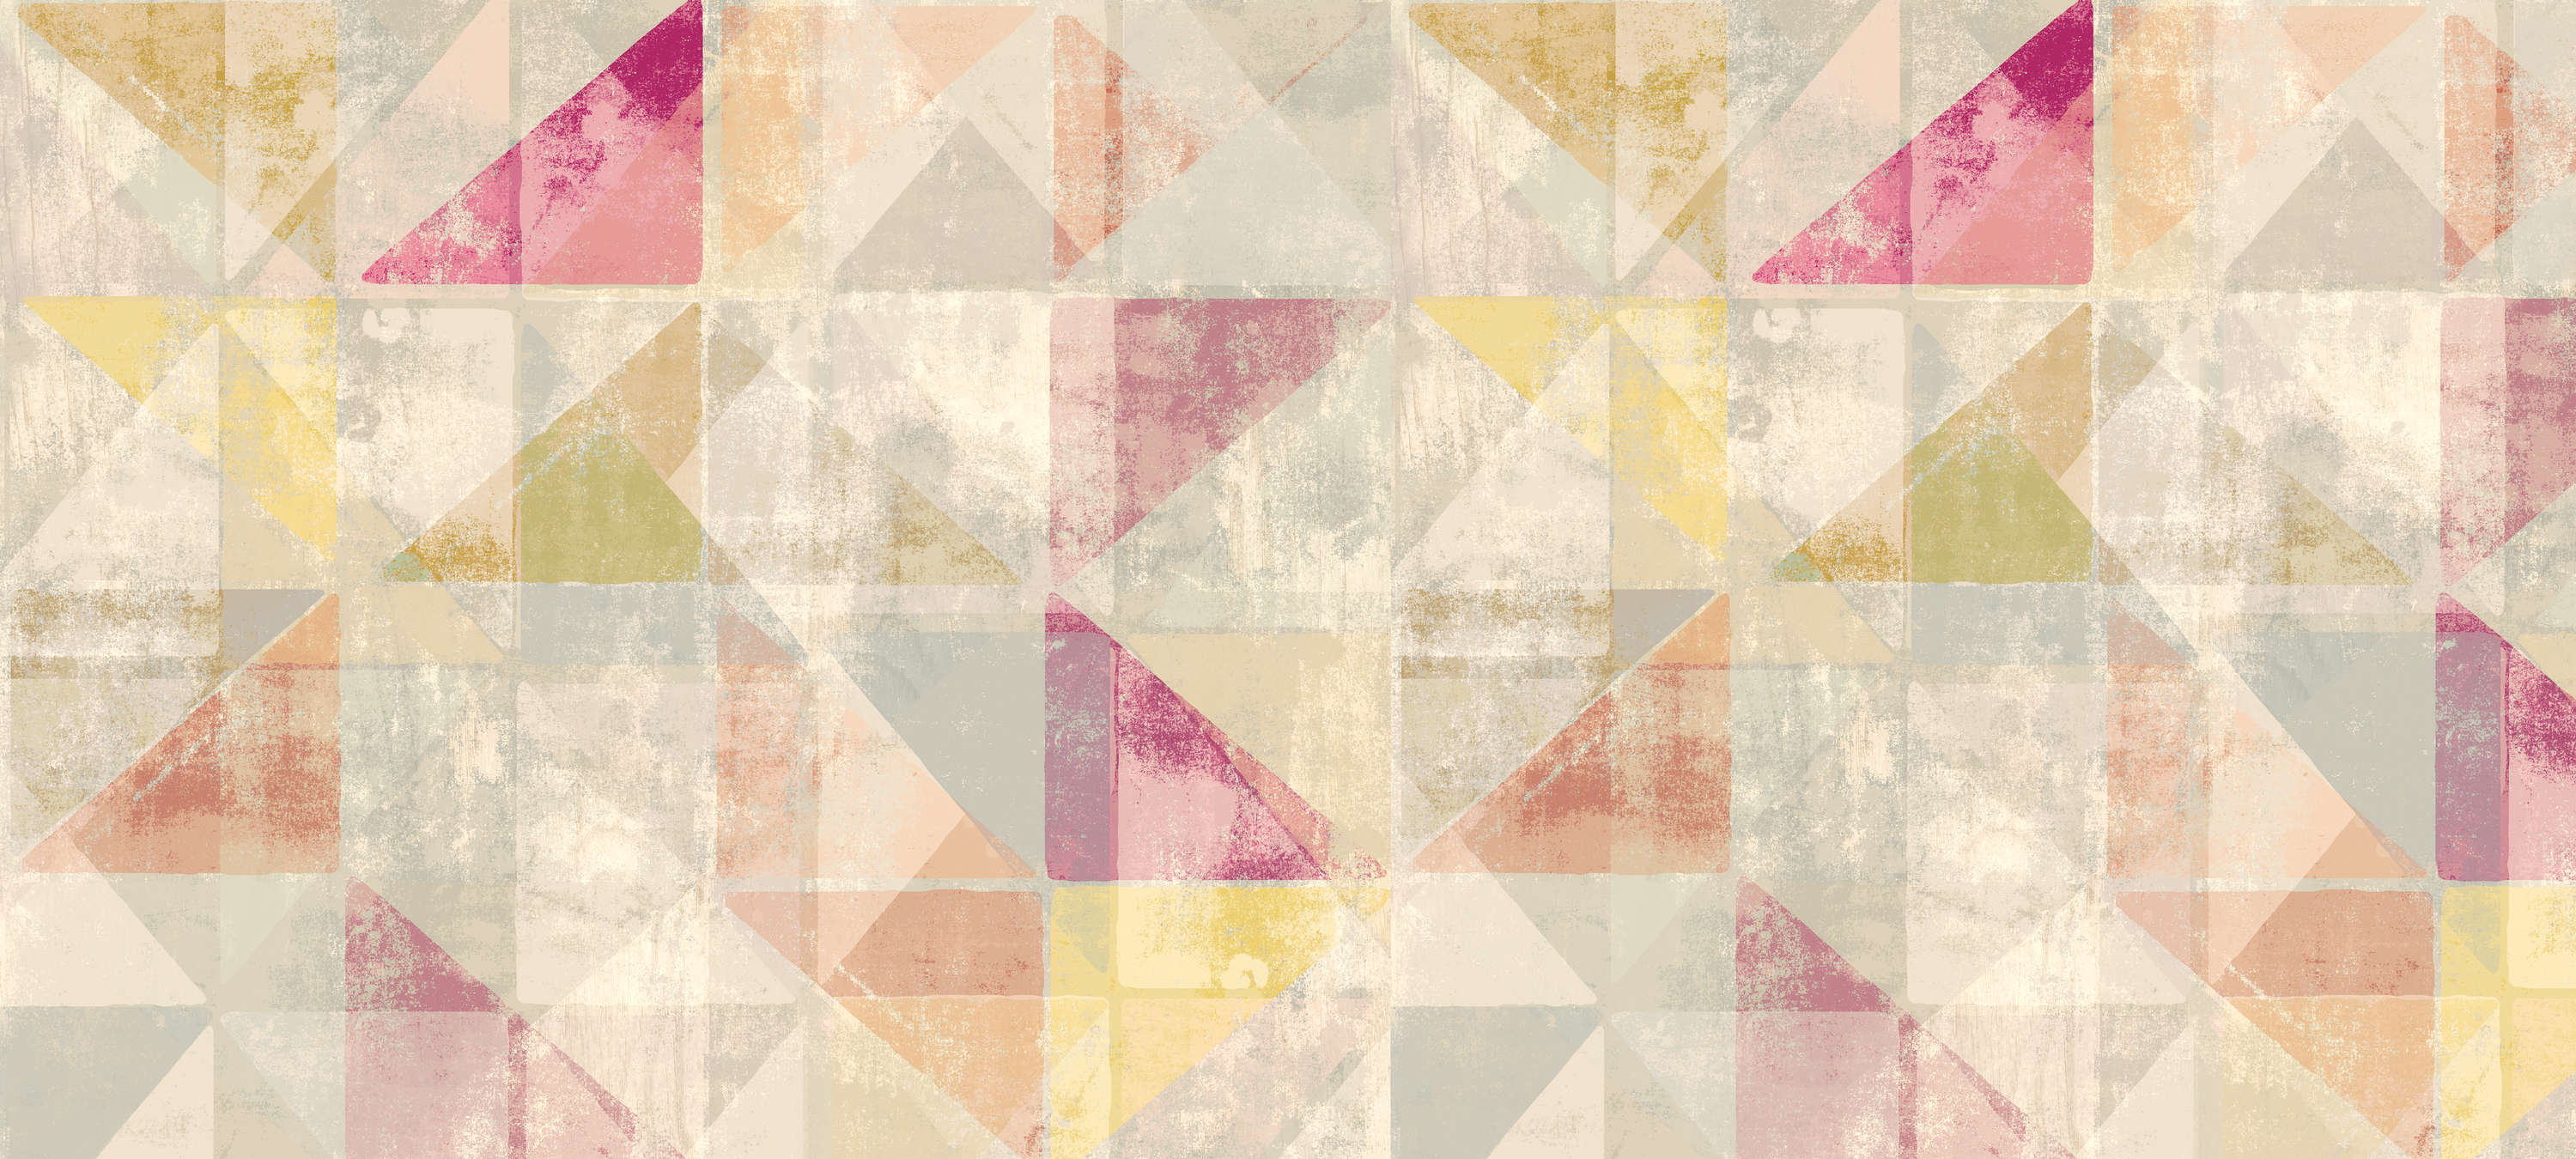             Papier peint Triangle, Vintage Look & Used Design - jaune, gris, violet
        